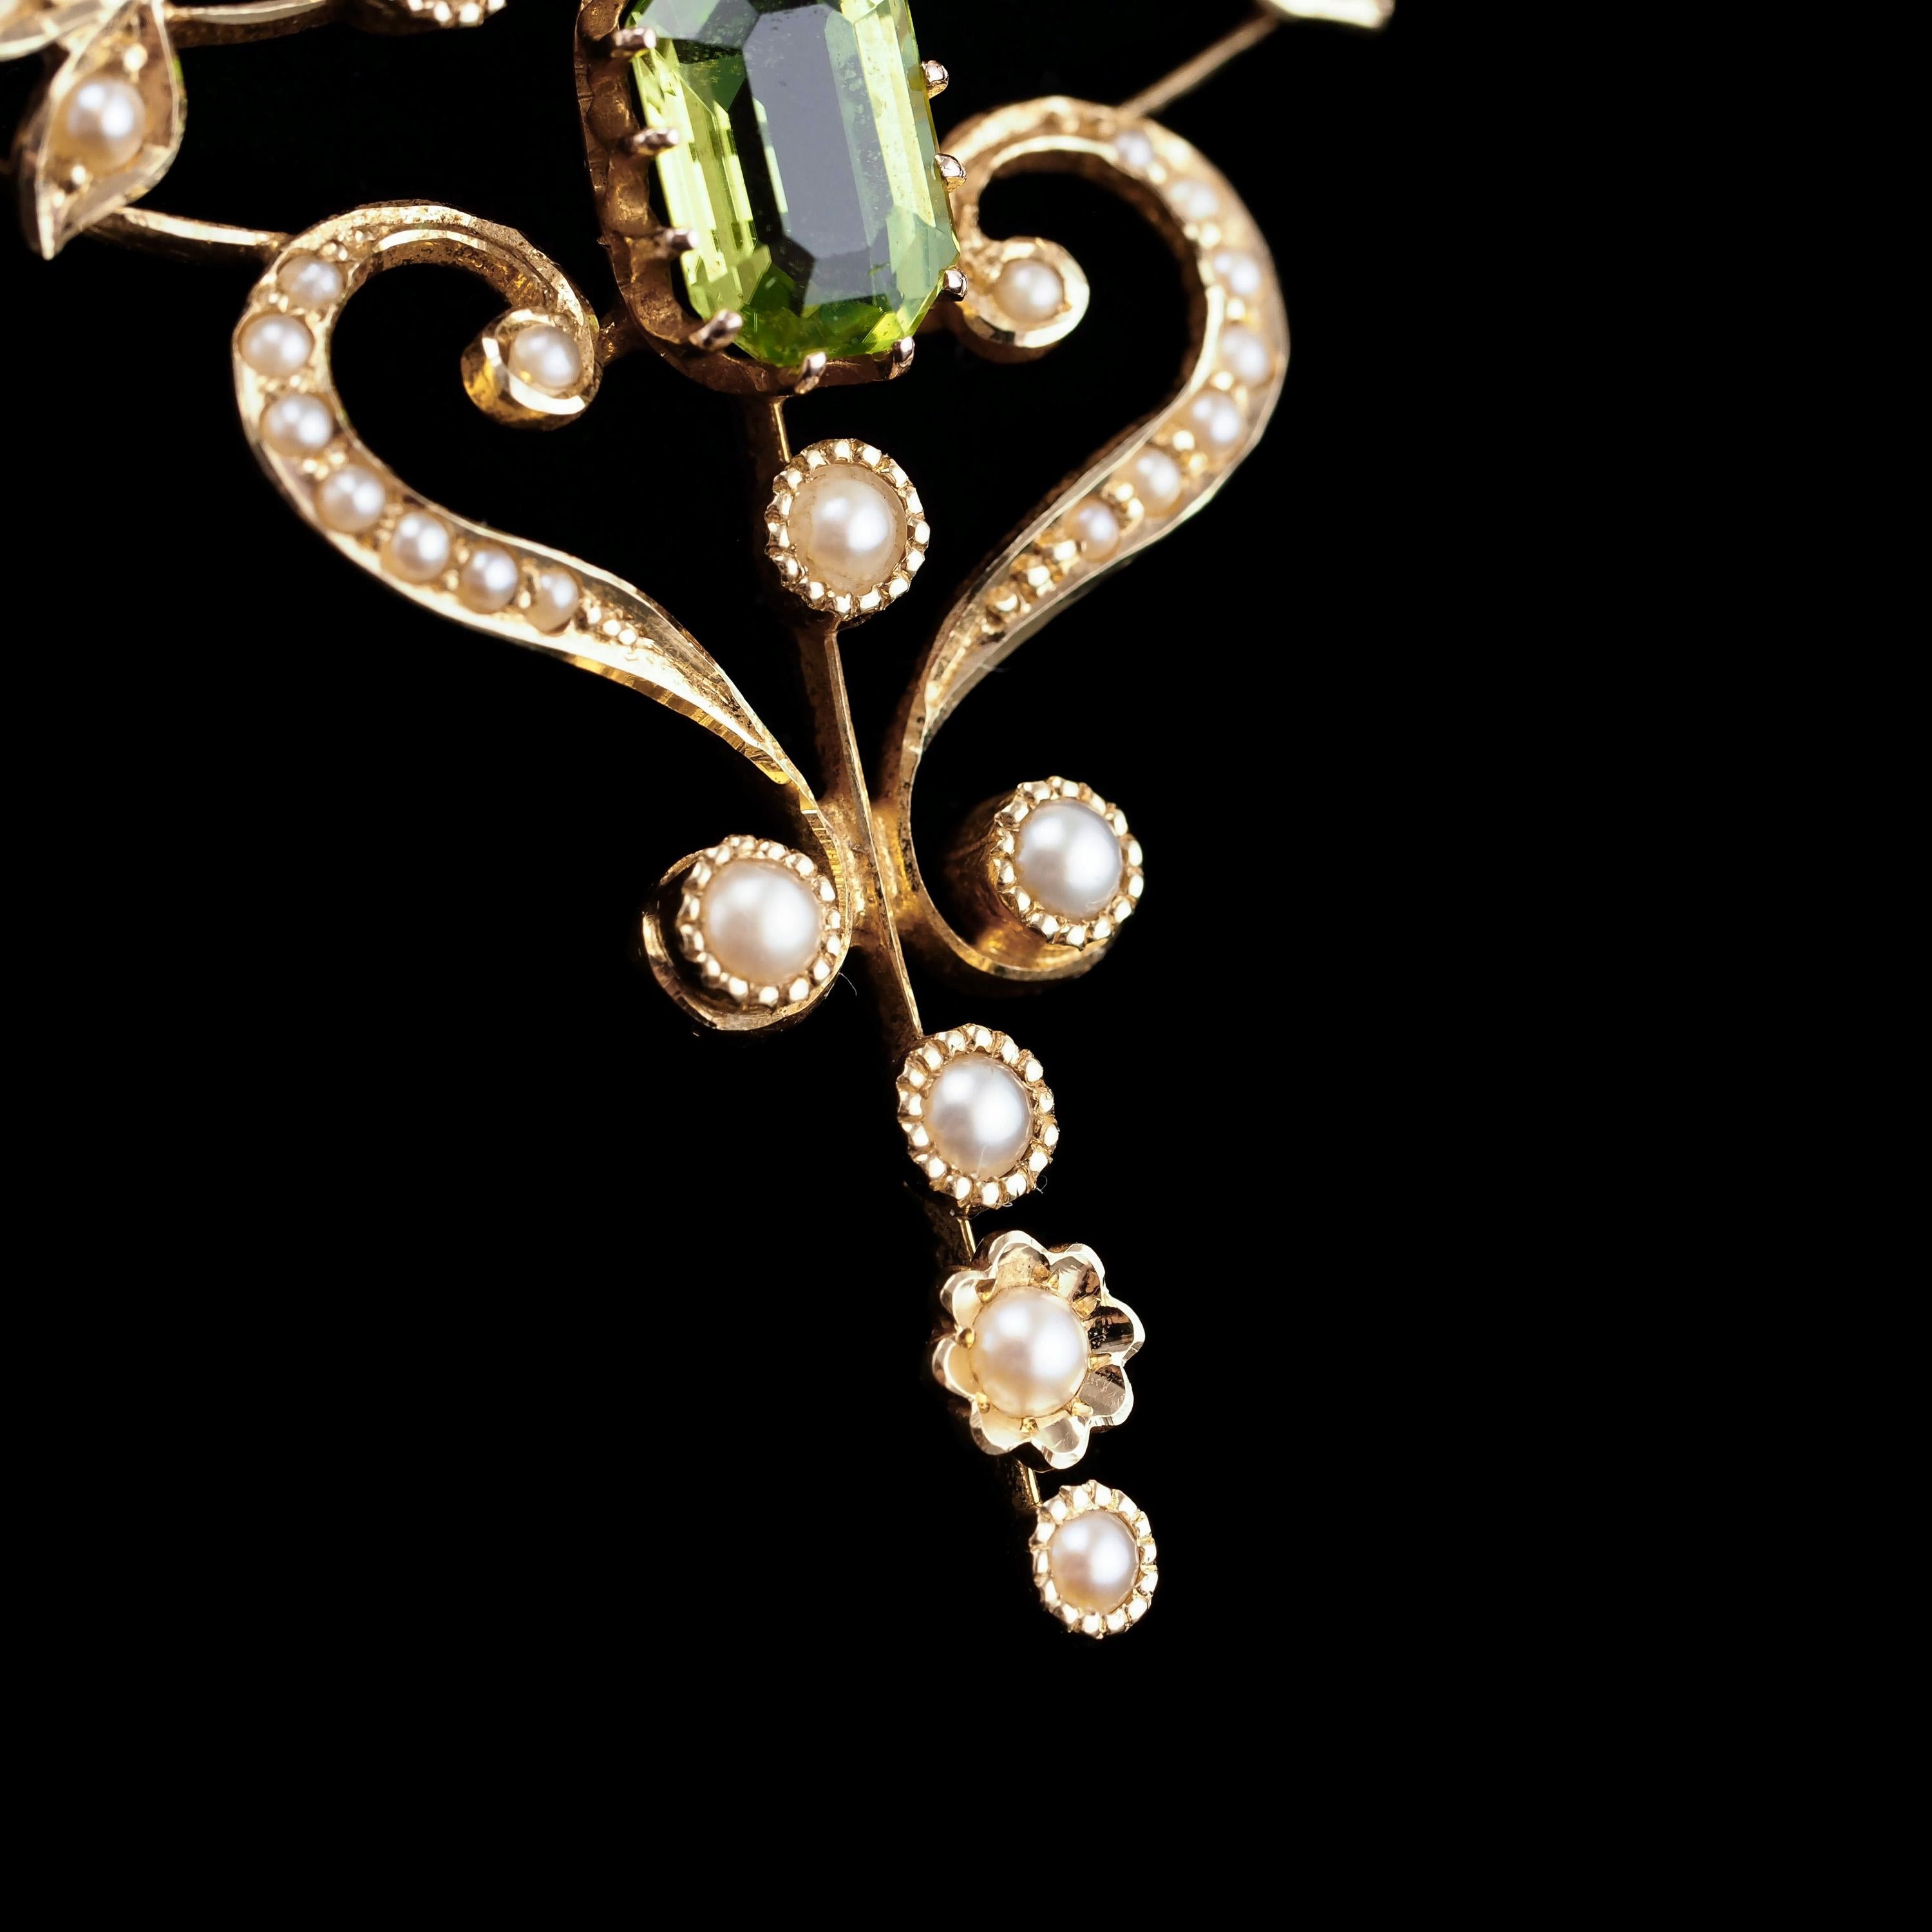 Women's or Men's Antique Edwardian 15K Gold Peridot & Pearl Necklace/Pendant - c.1910